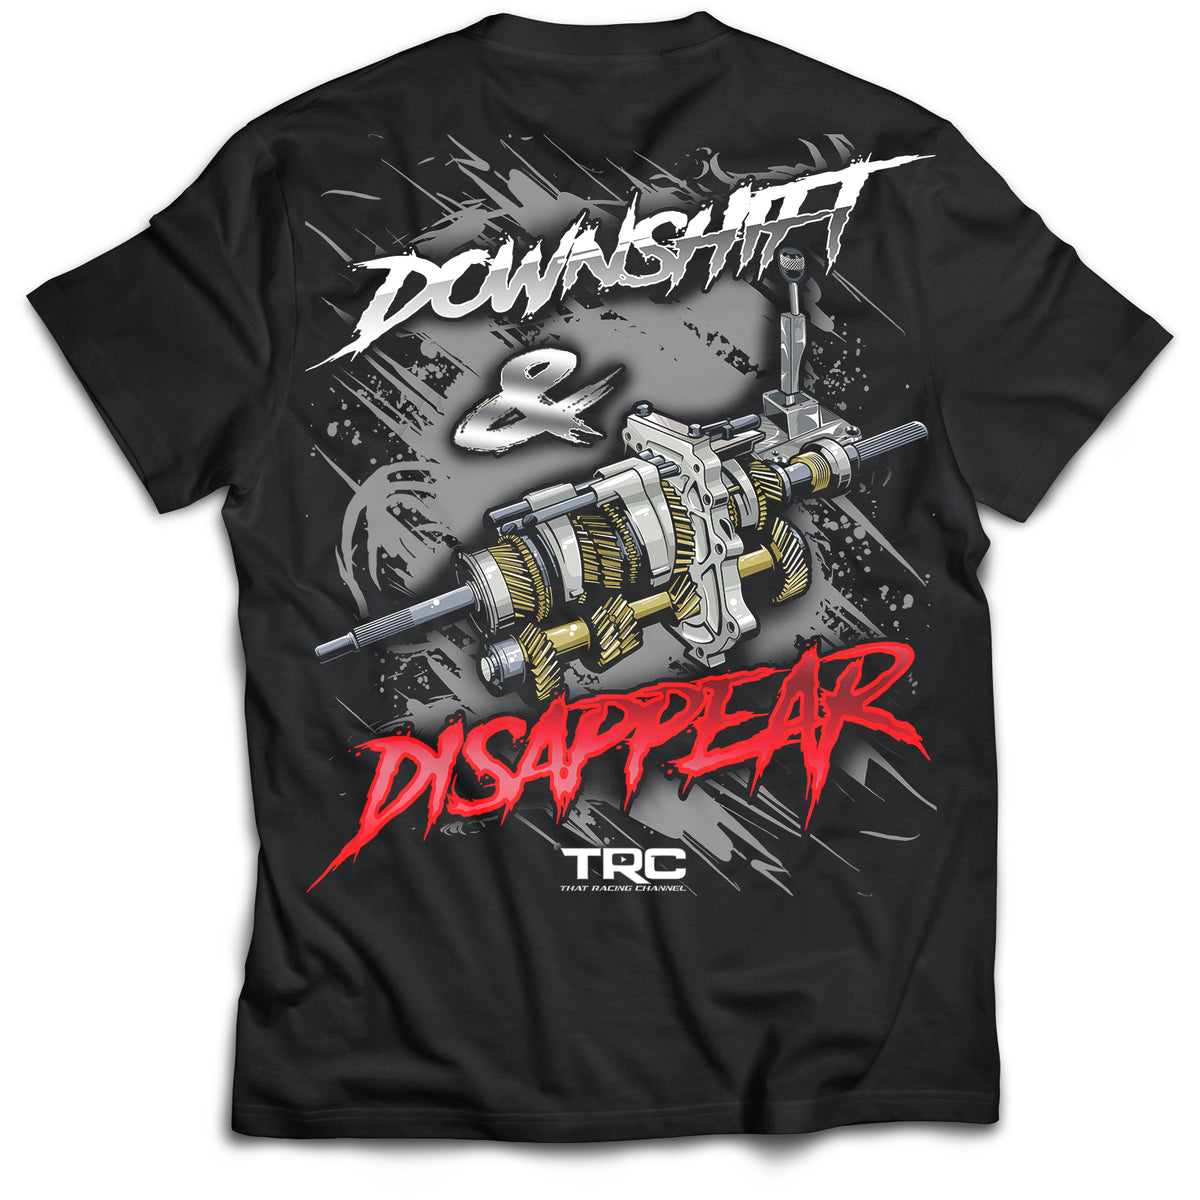 Downshift & Disappear T-Shirt (700 Entries)